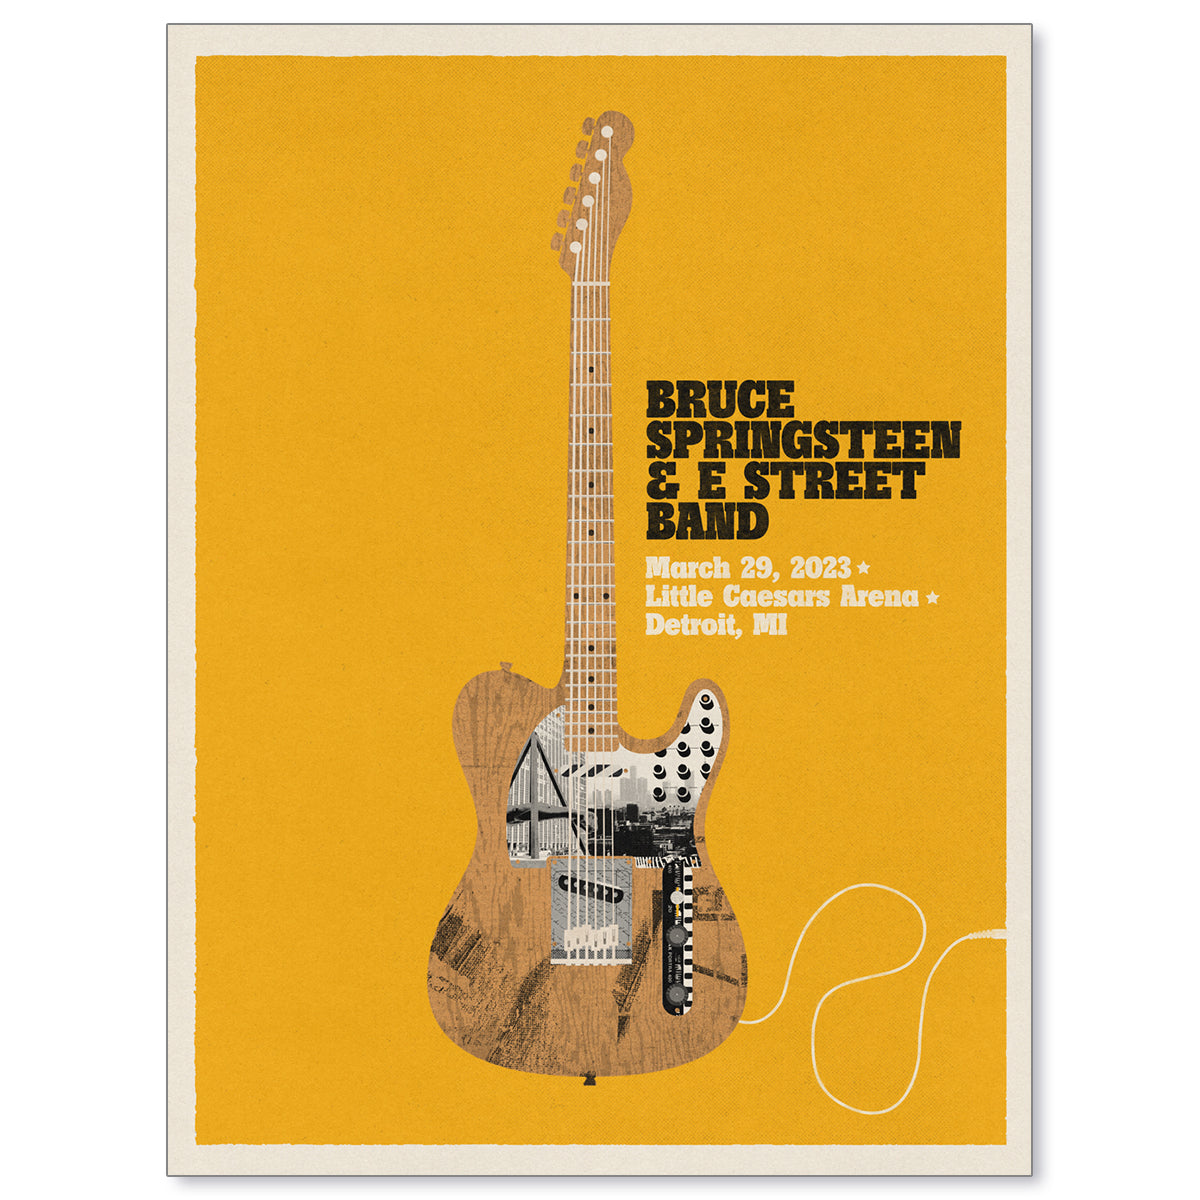 Bruce Springsteen & E Street Band Detroit March 29, 2023